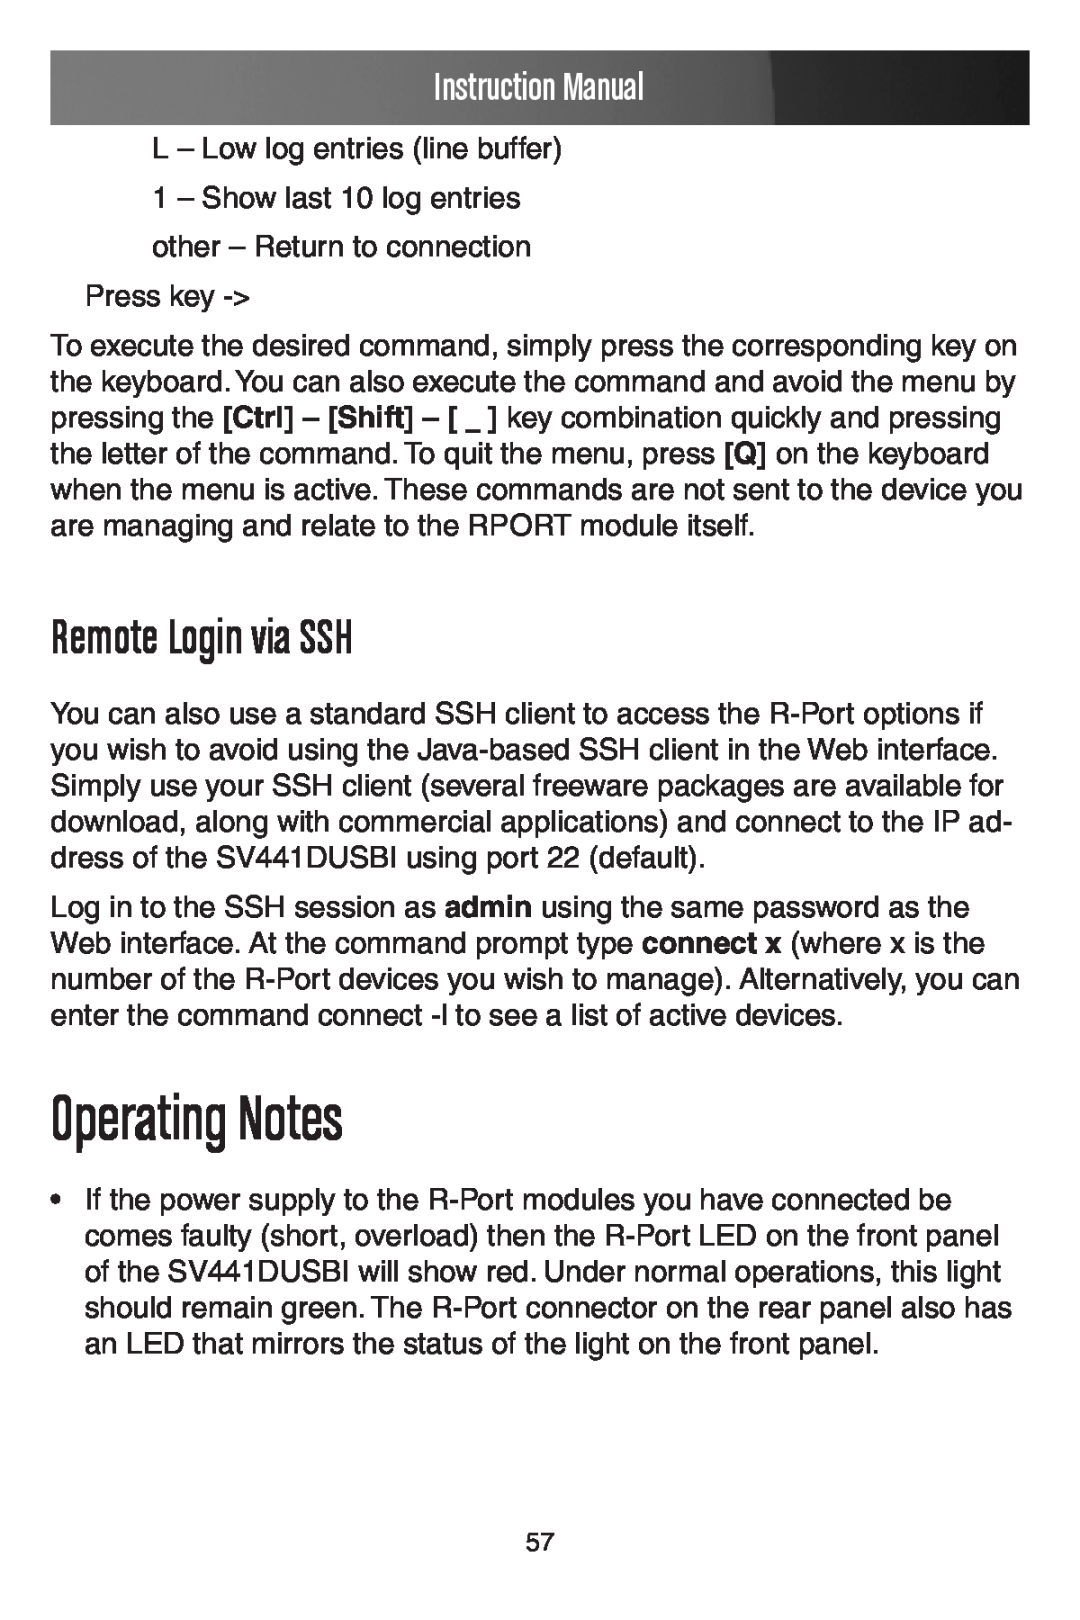 StarTech.com SV441DUSBI instruction manual Operating Notes, Remote Login via SSH, Instruction Manual 